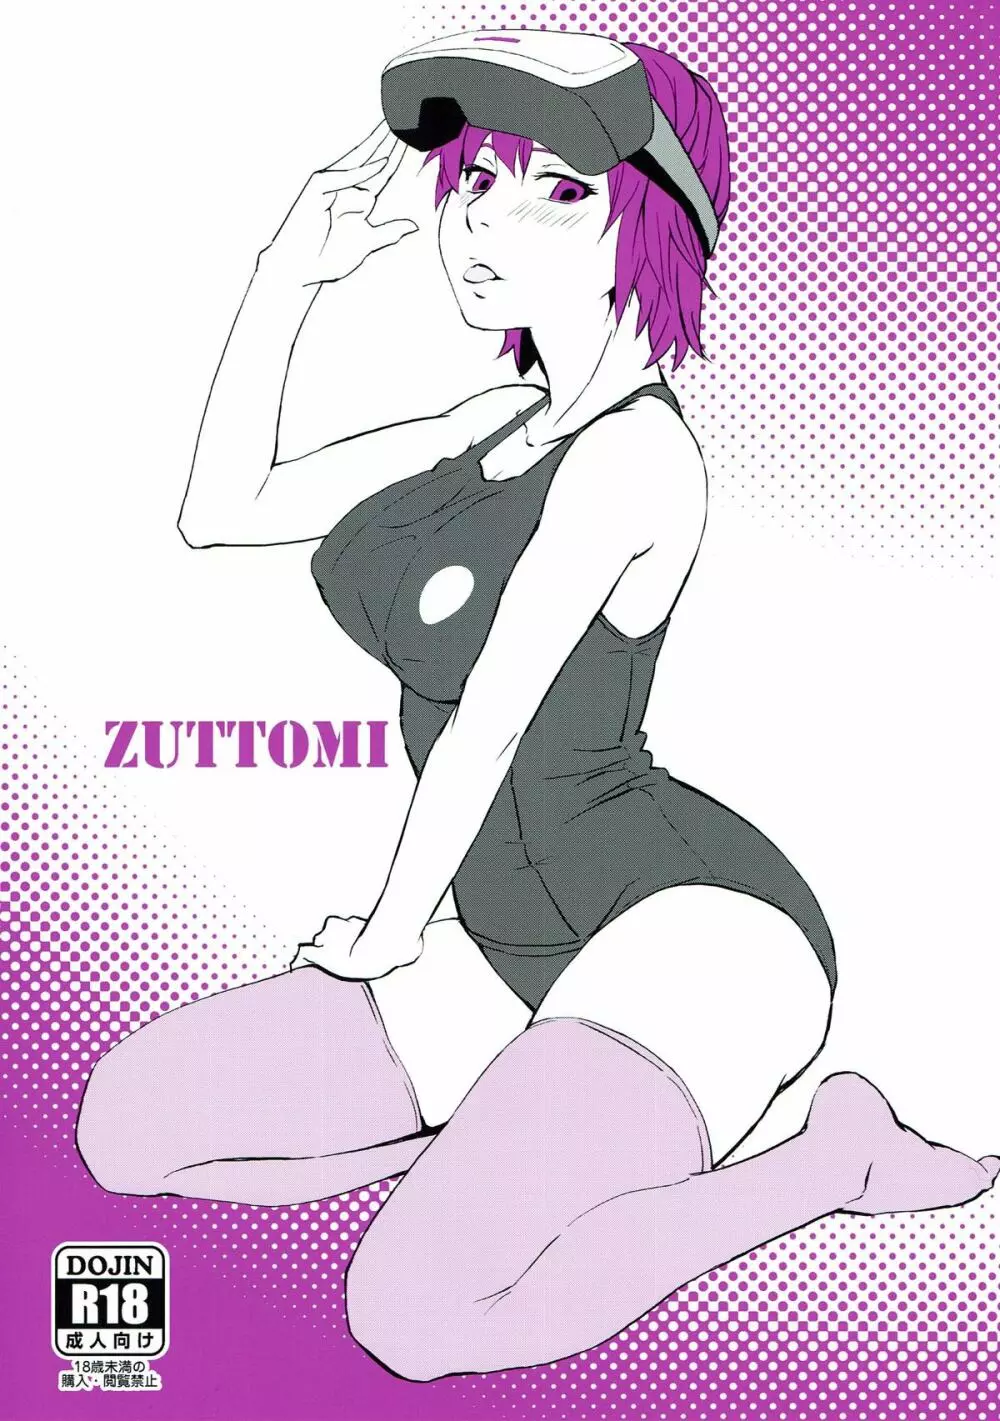 ZUTTOMI - page1